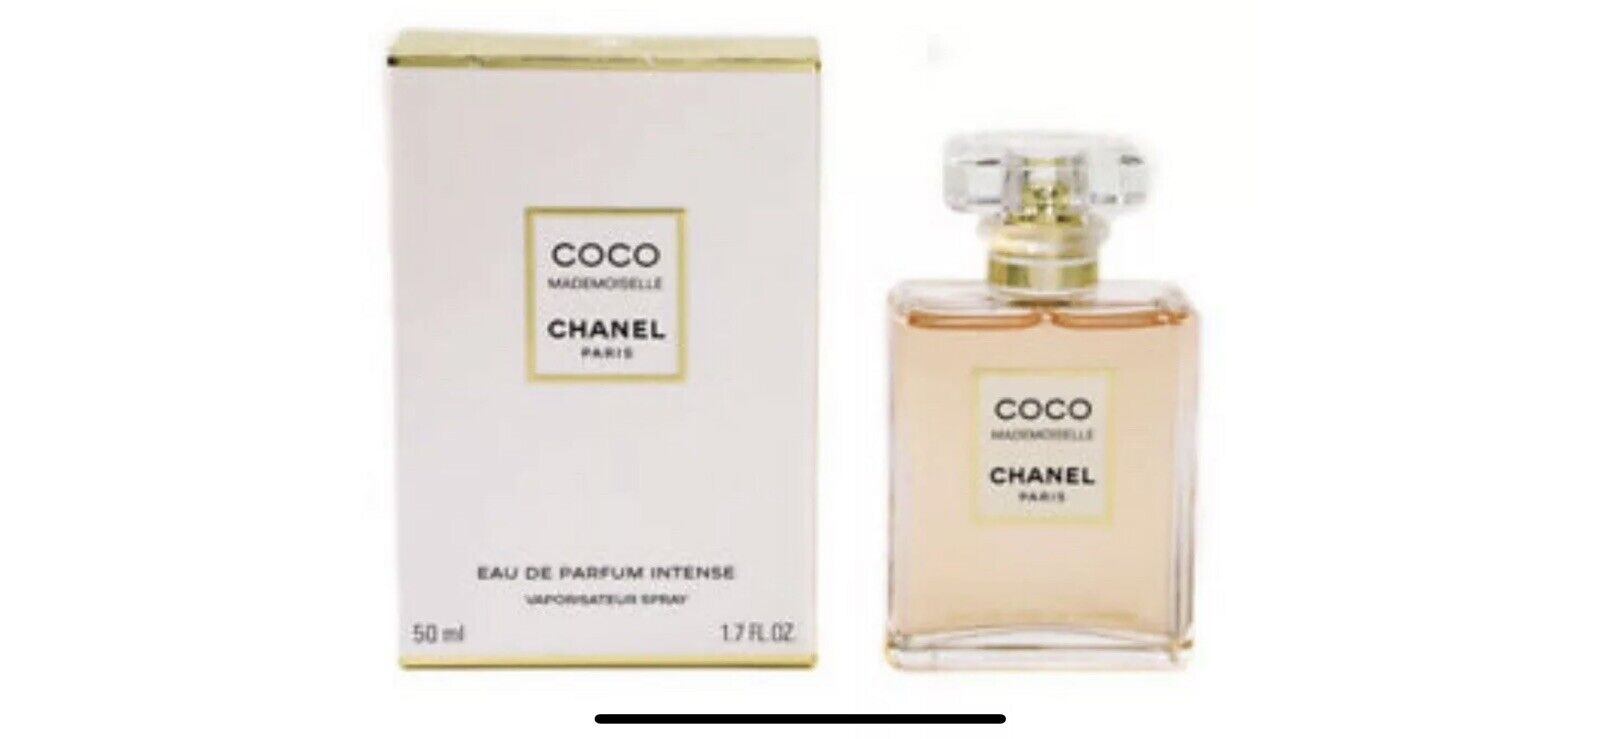 Chanel Coco Mademoiselle 1 7oz Women S Perfume For Sale Online Ebay